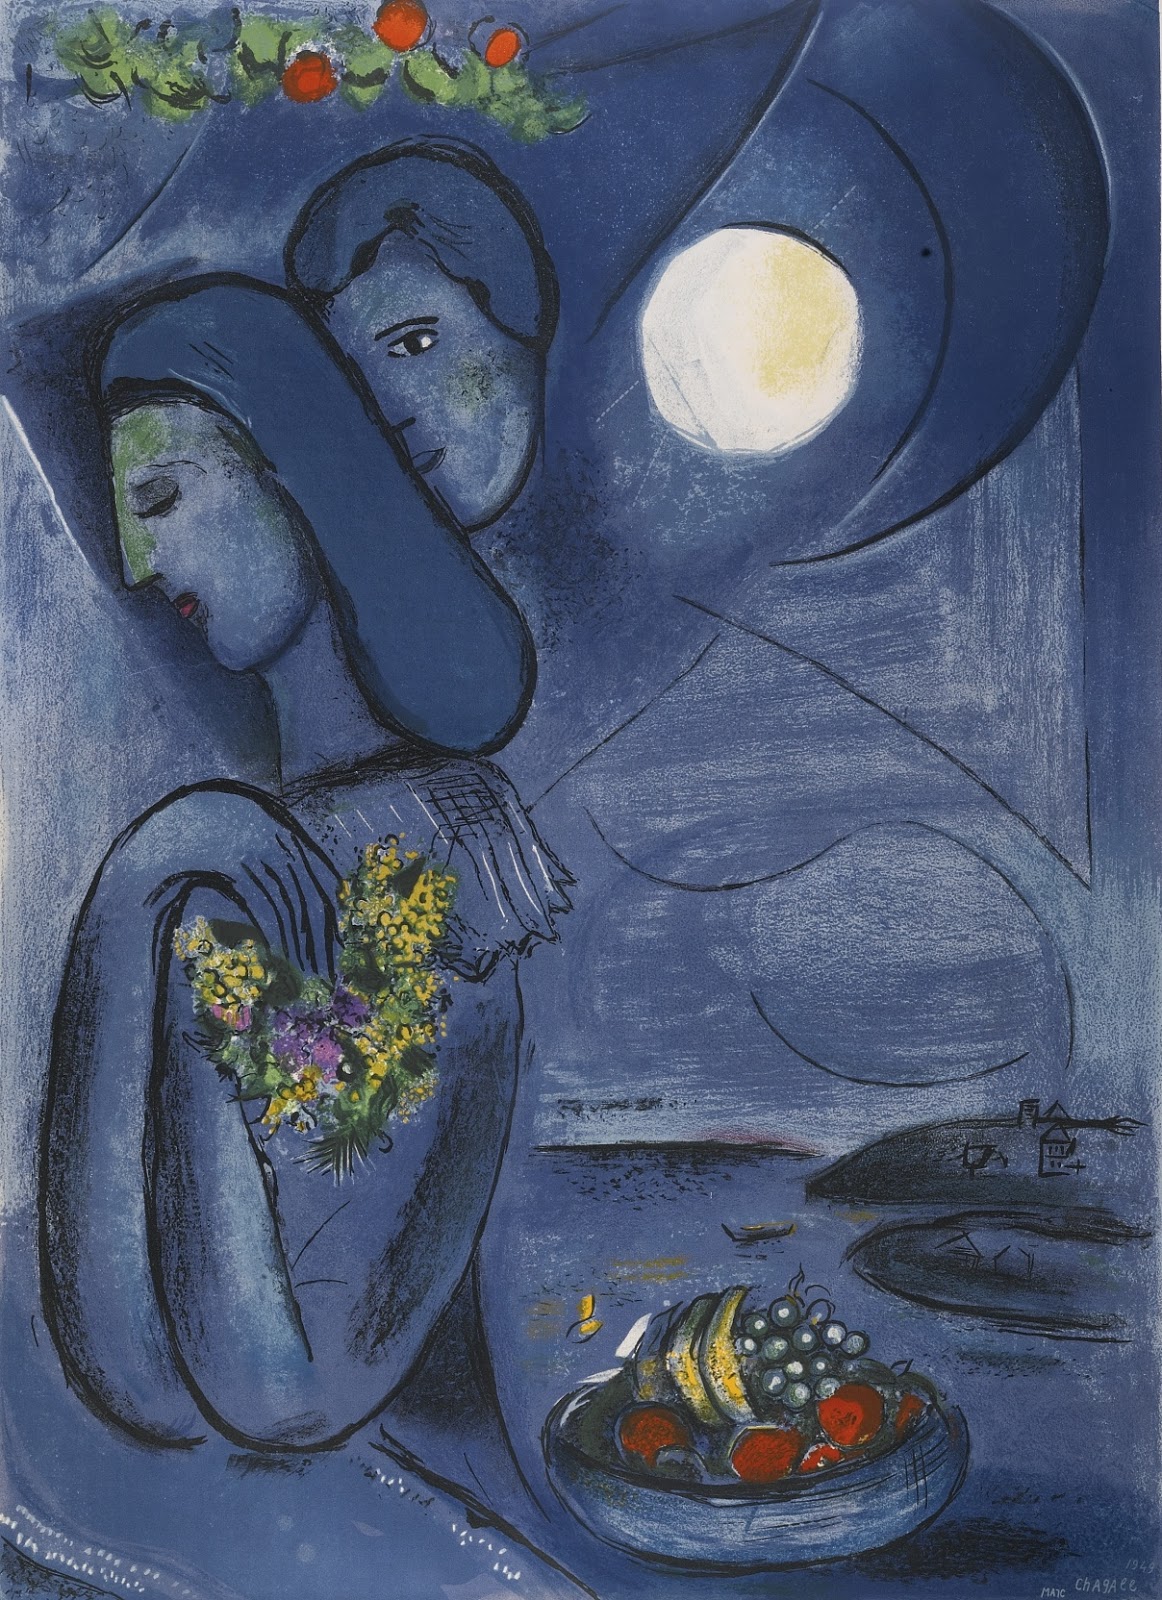 Marc+Chagall-1887-1985 (358).jpg